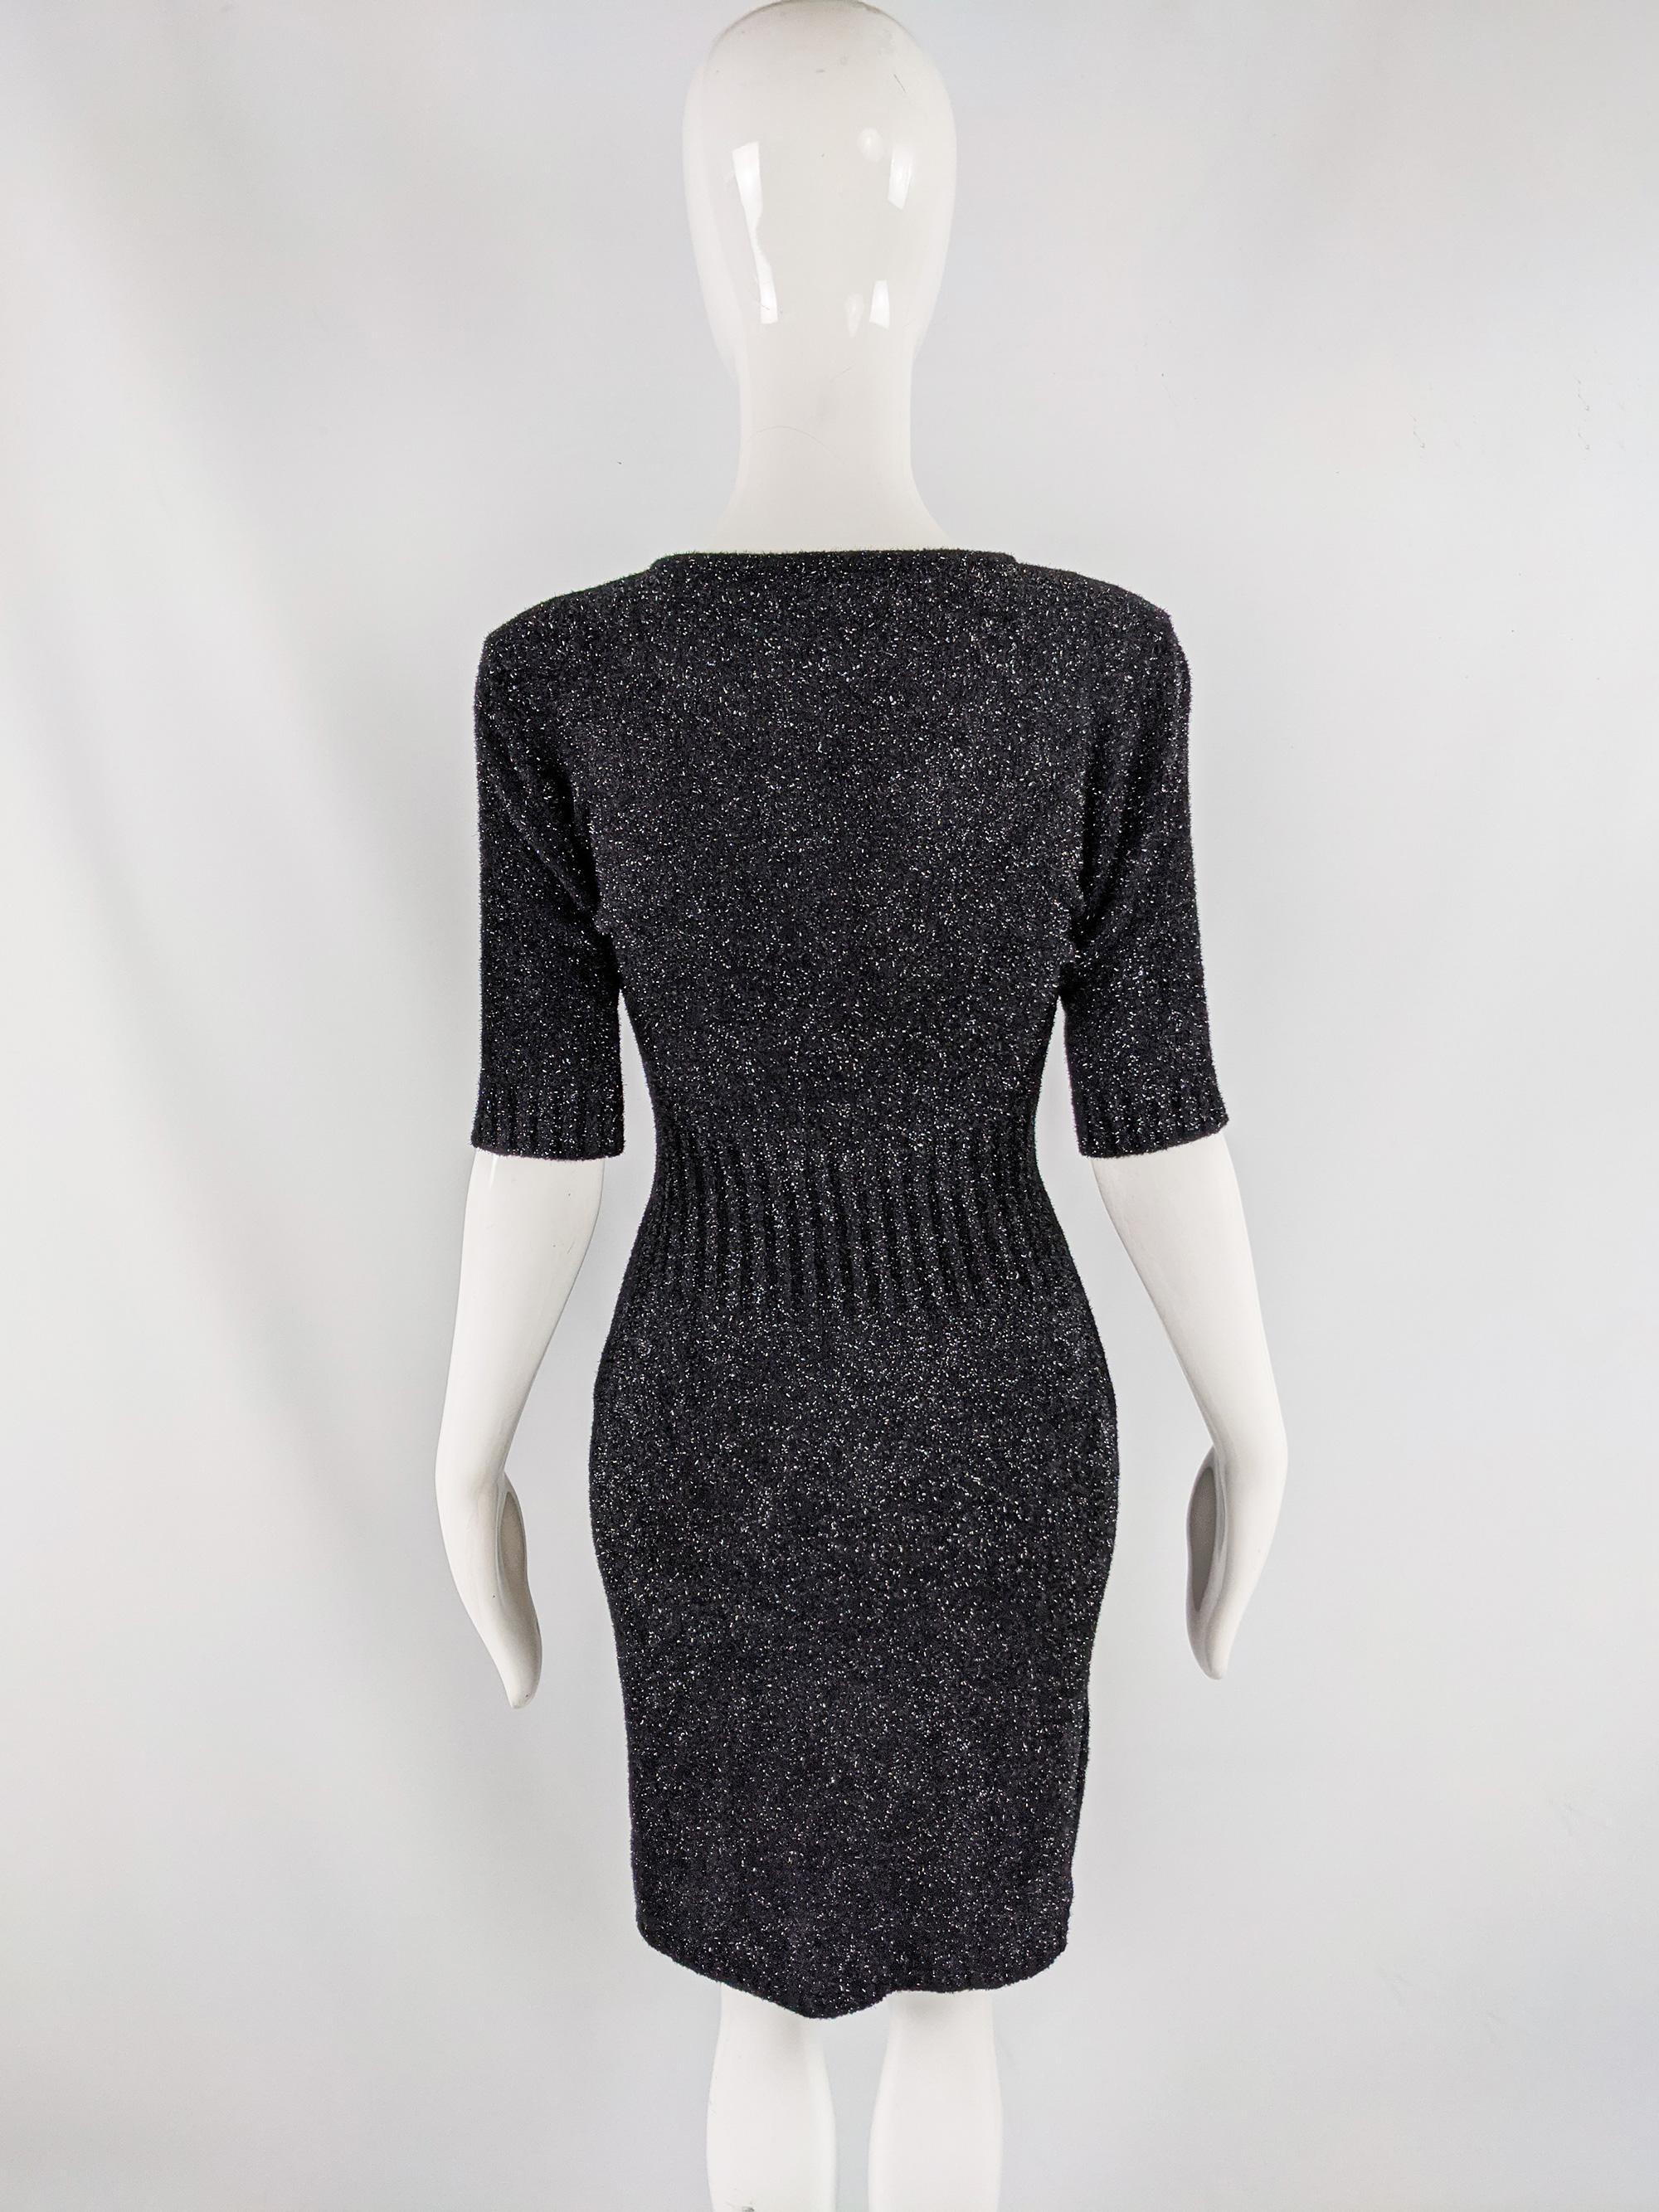 Women's Joseph Tricot Vintage Black & Silver Sparkly Lurex Fluffy Knit Dress, 1990s 